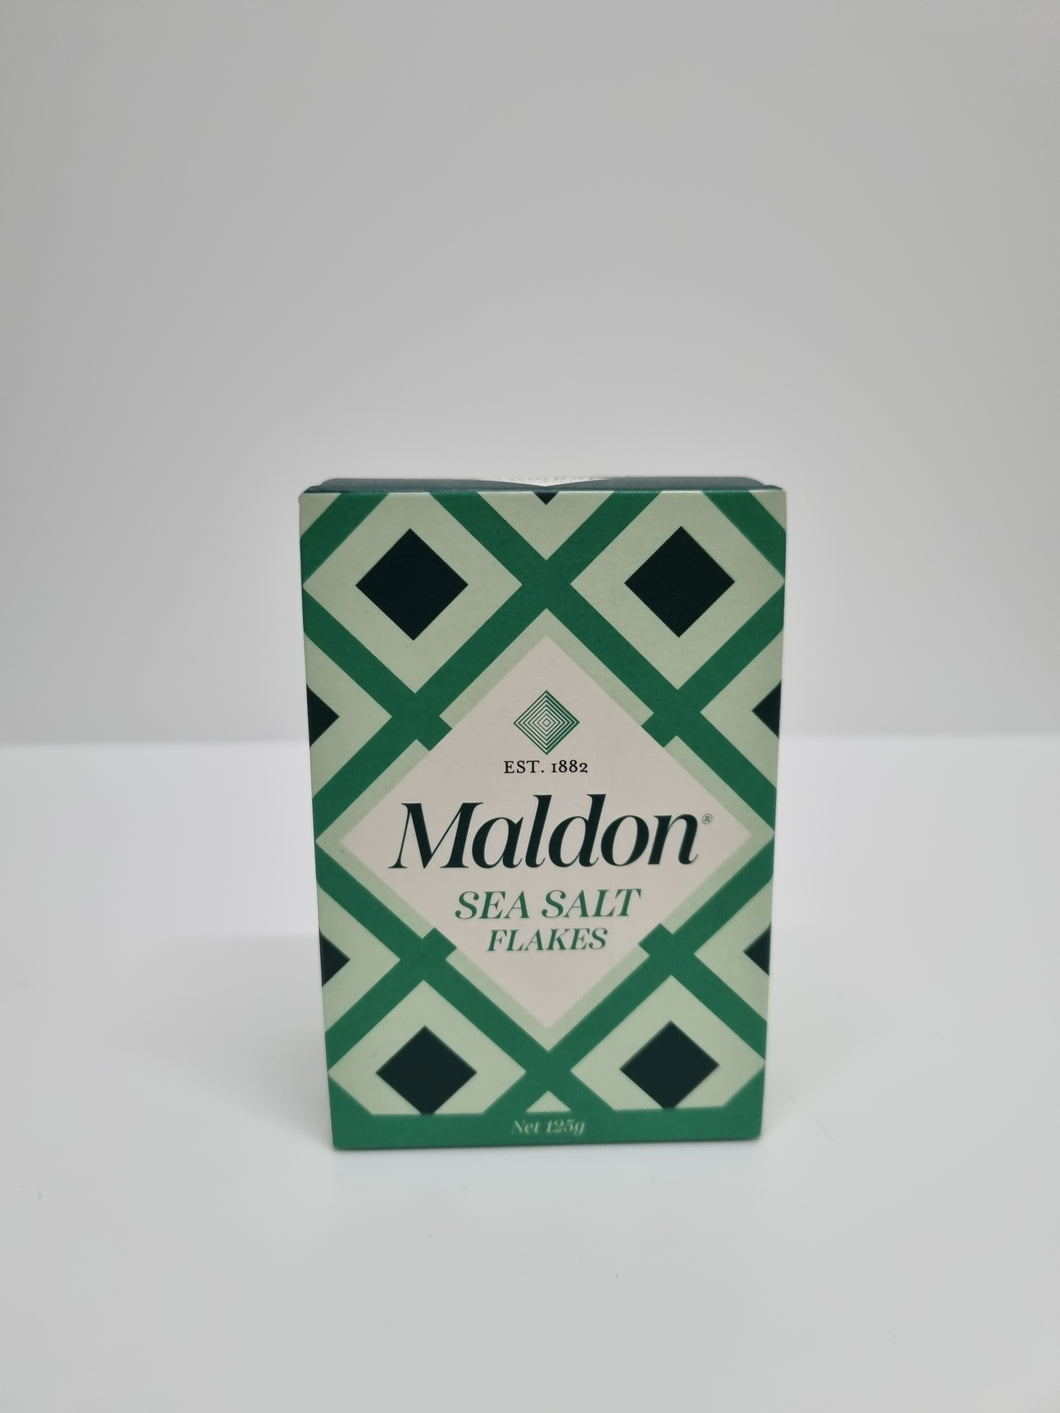 Maldon (Sea salt flakes)